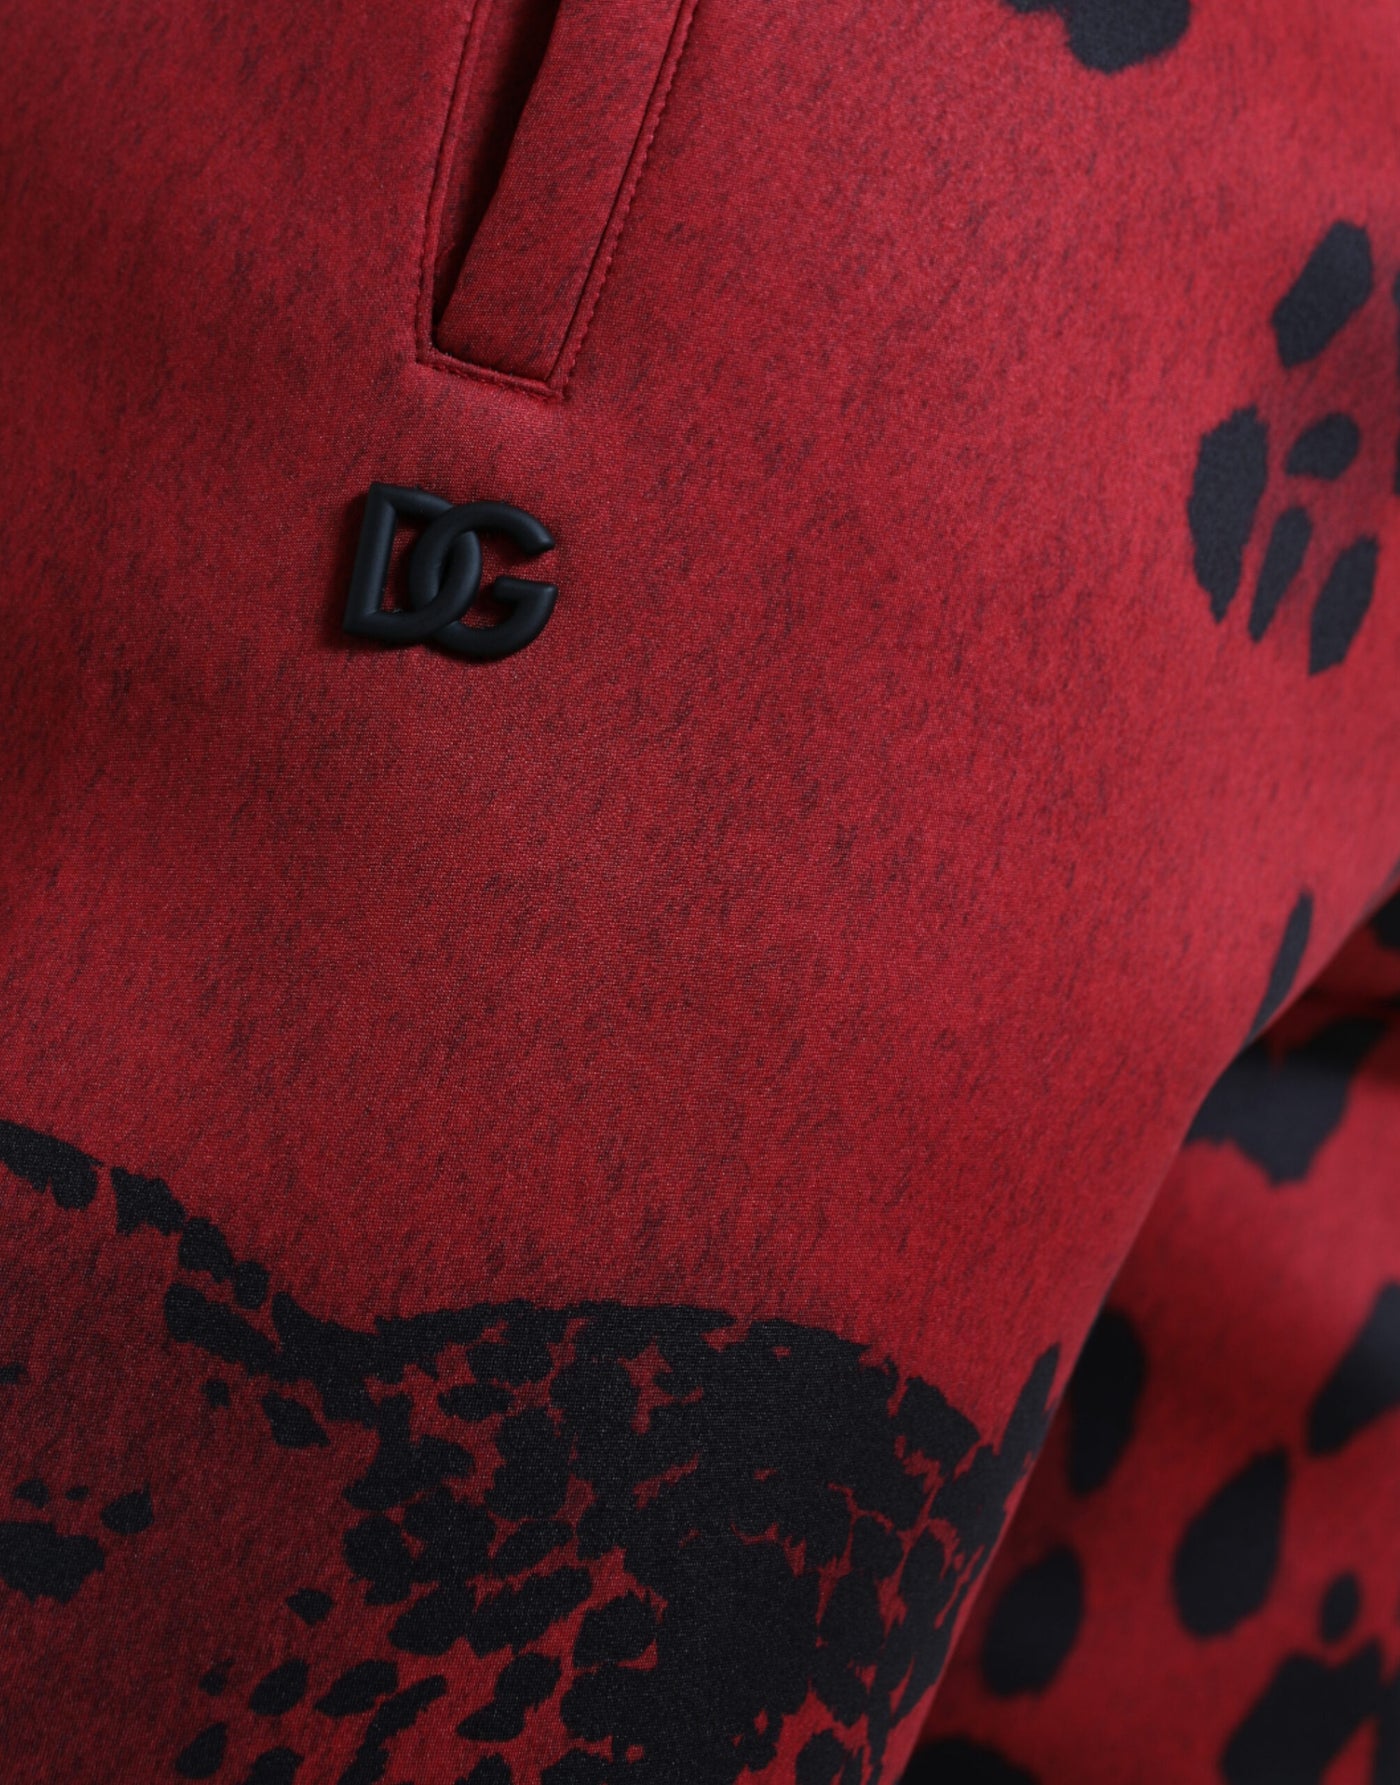 Dolce & Gabbana Red Black Leopard Stretch Jogger Pants